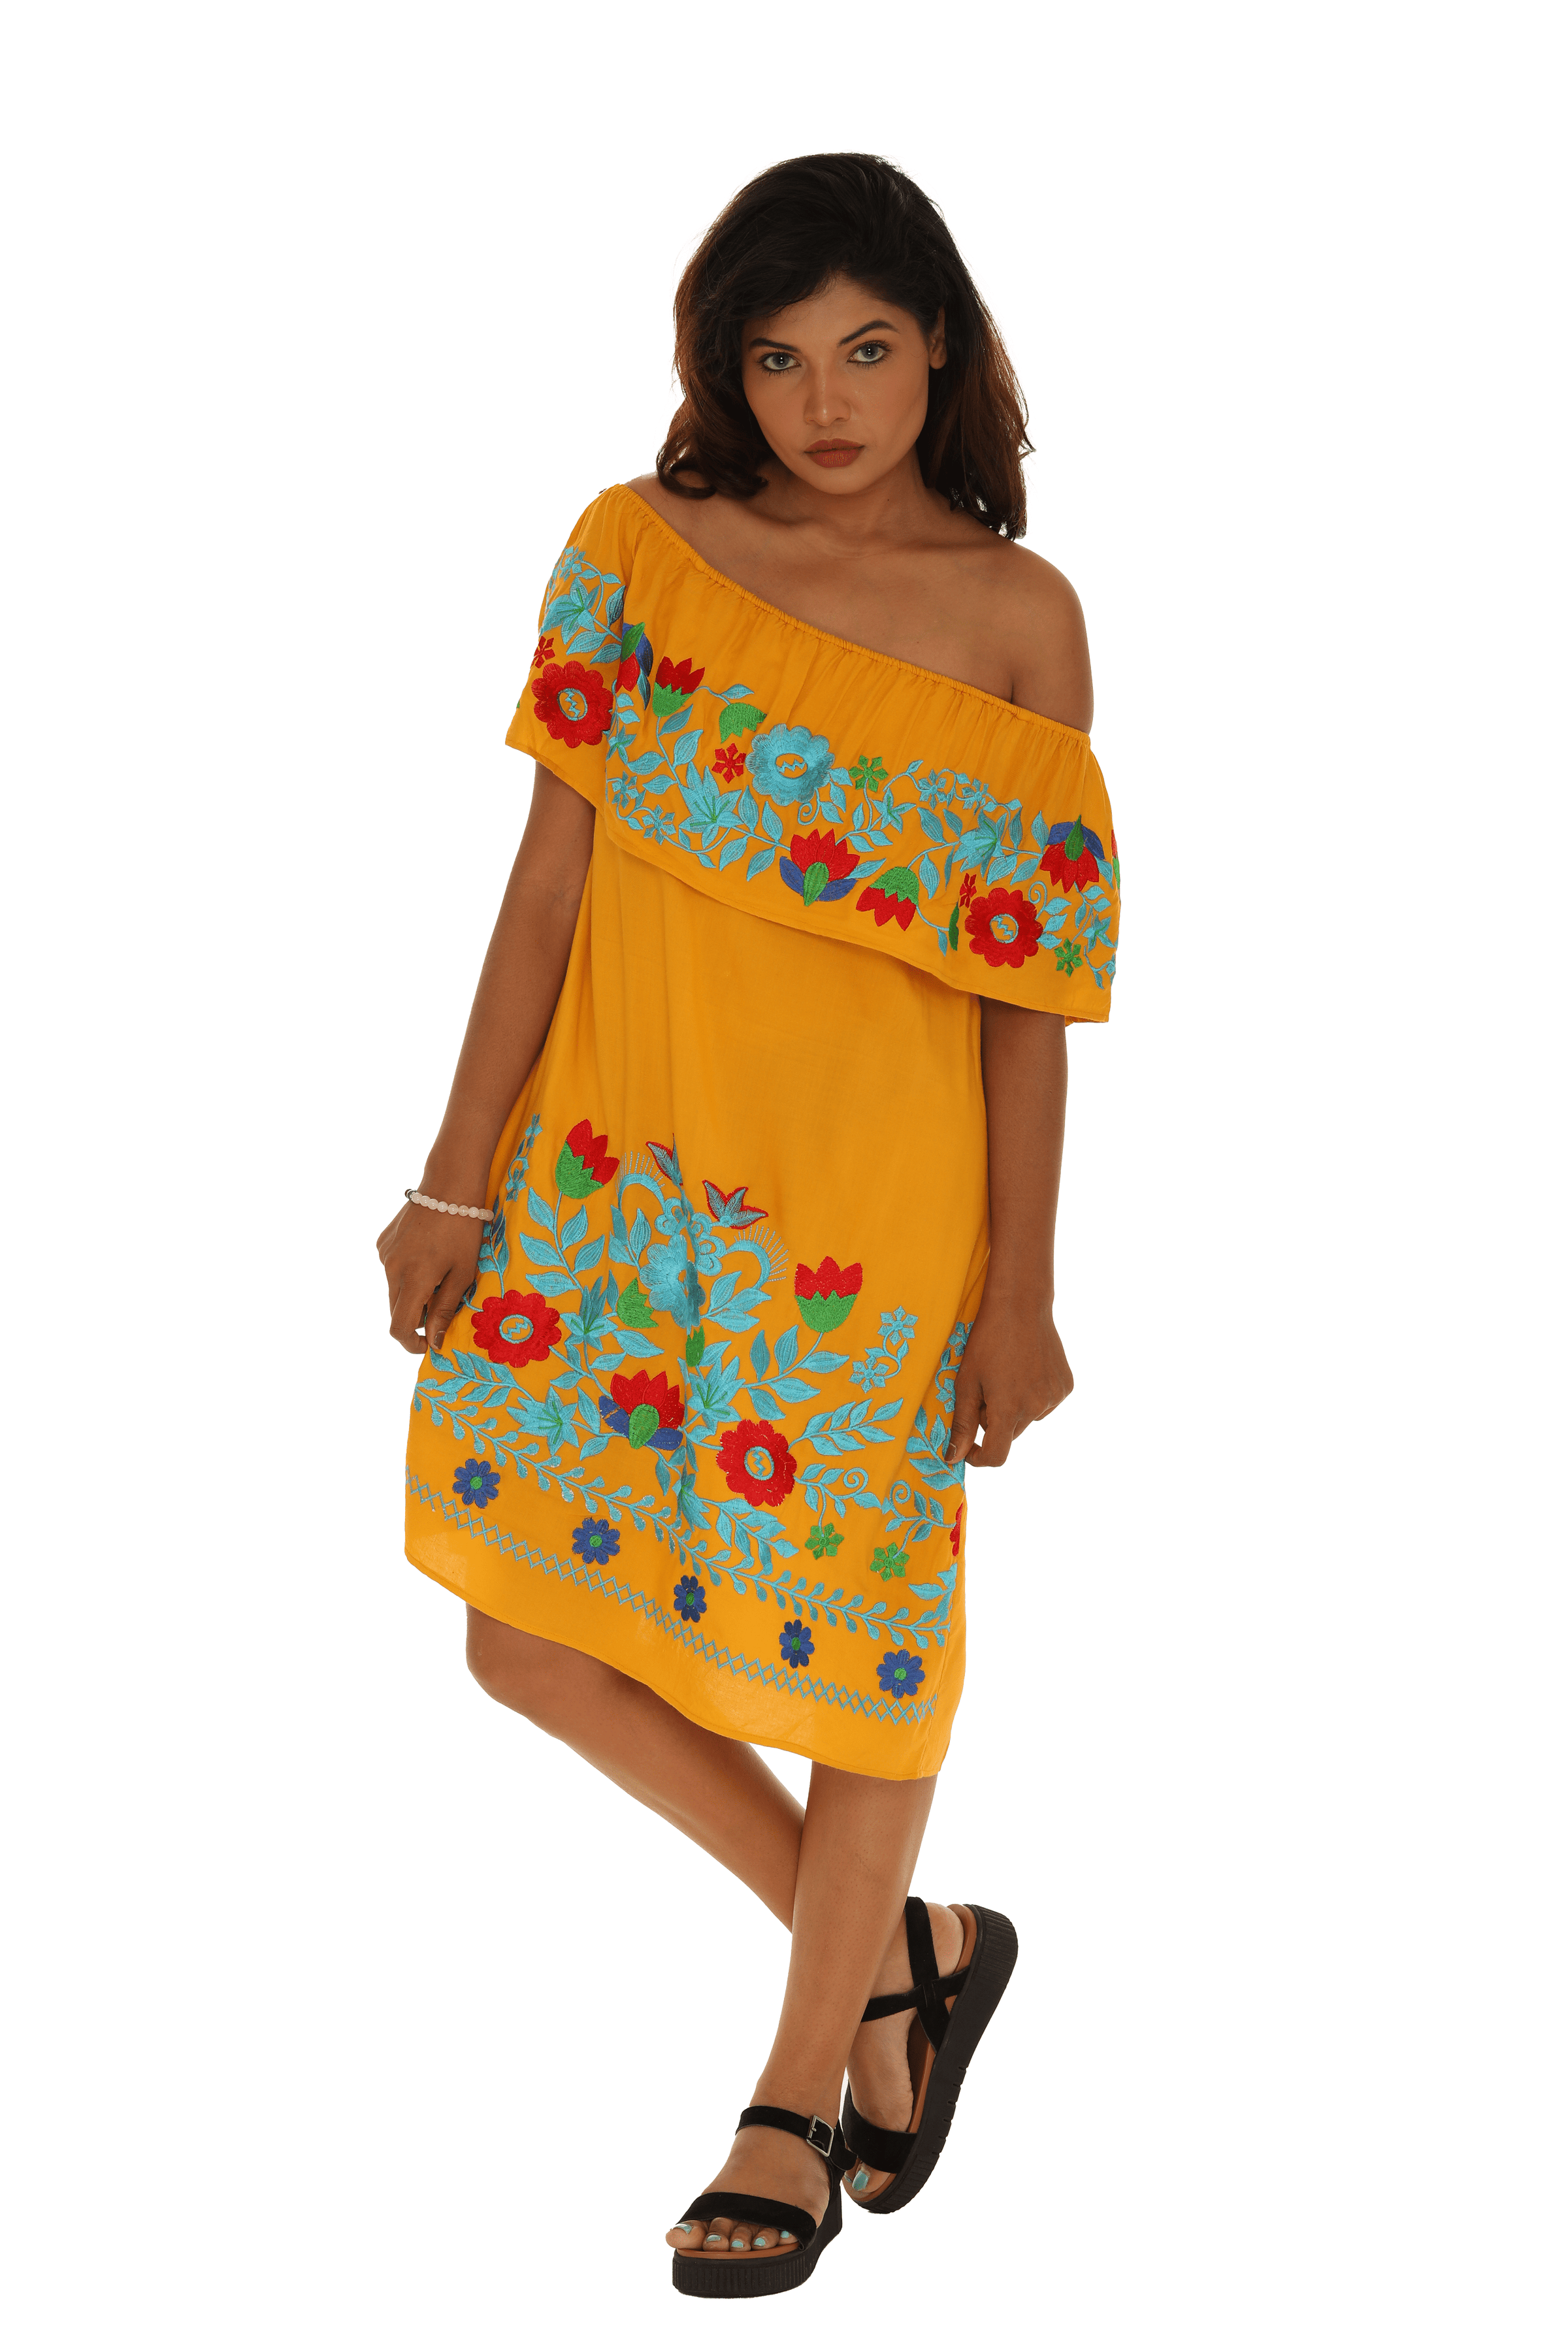 Floral Embroidery Dress Shoreline Wear Inc 